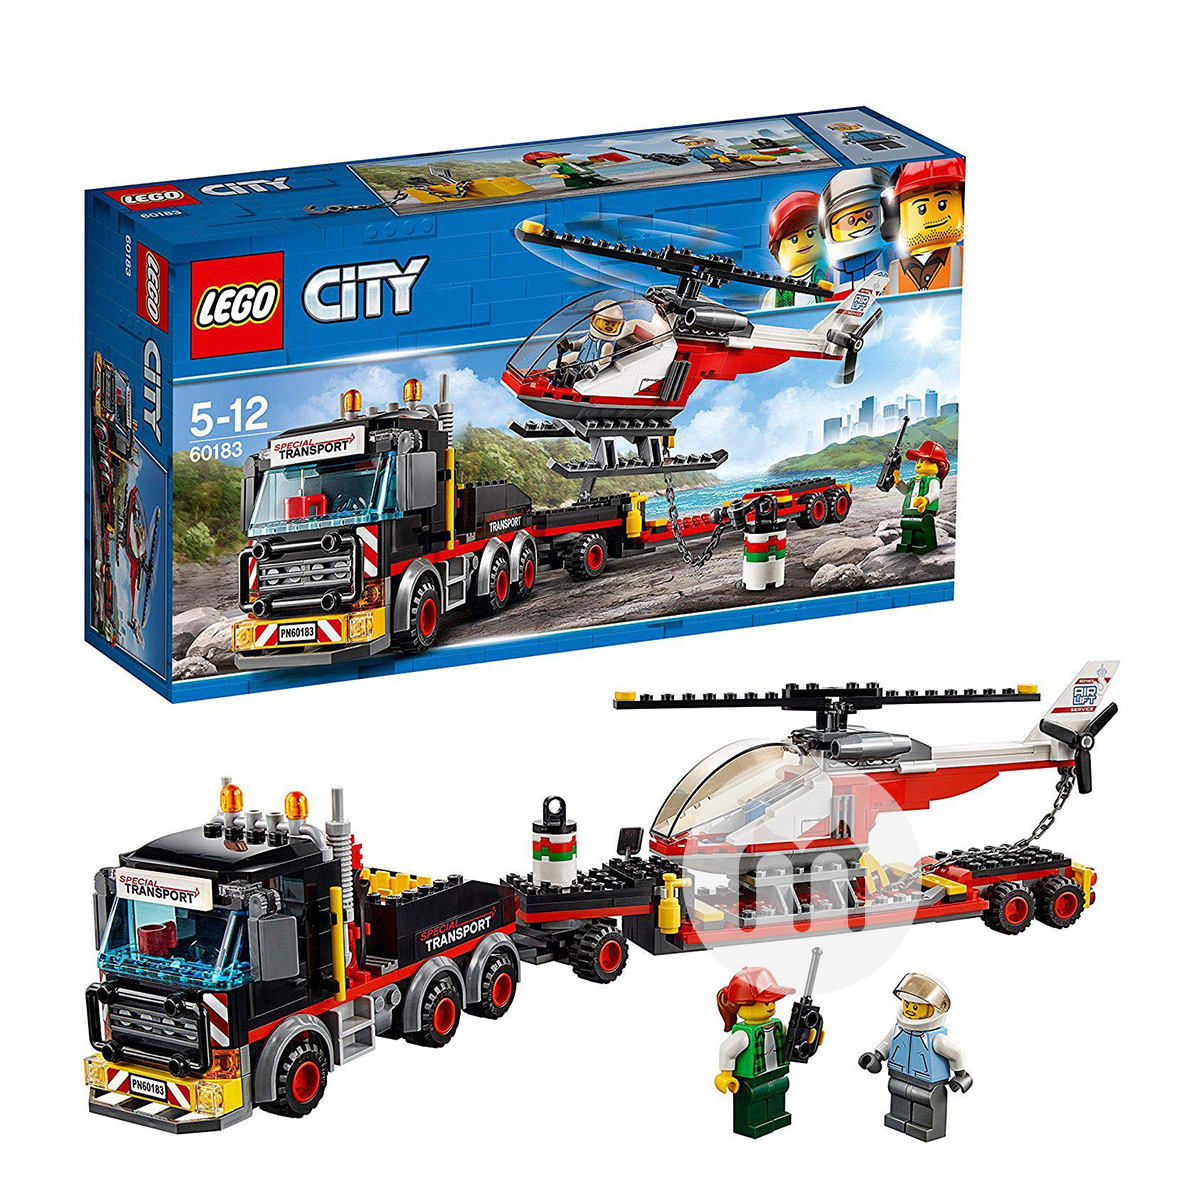 LEGO Danish city series heavy helic...